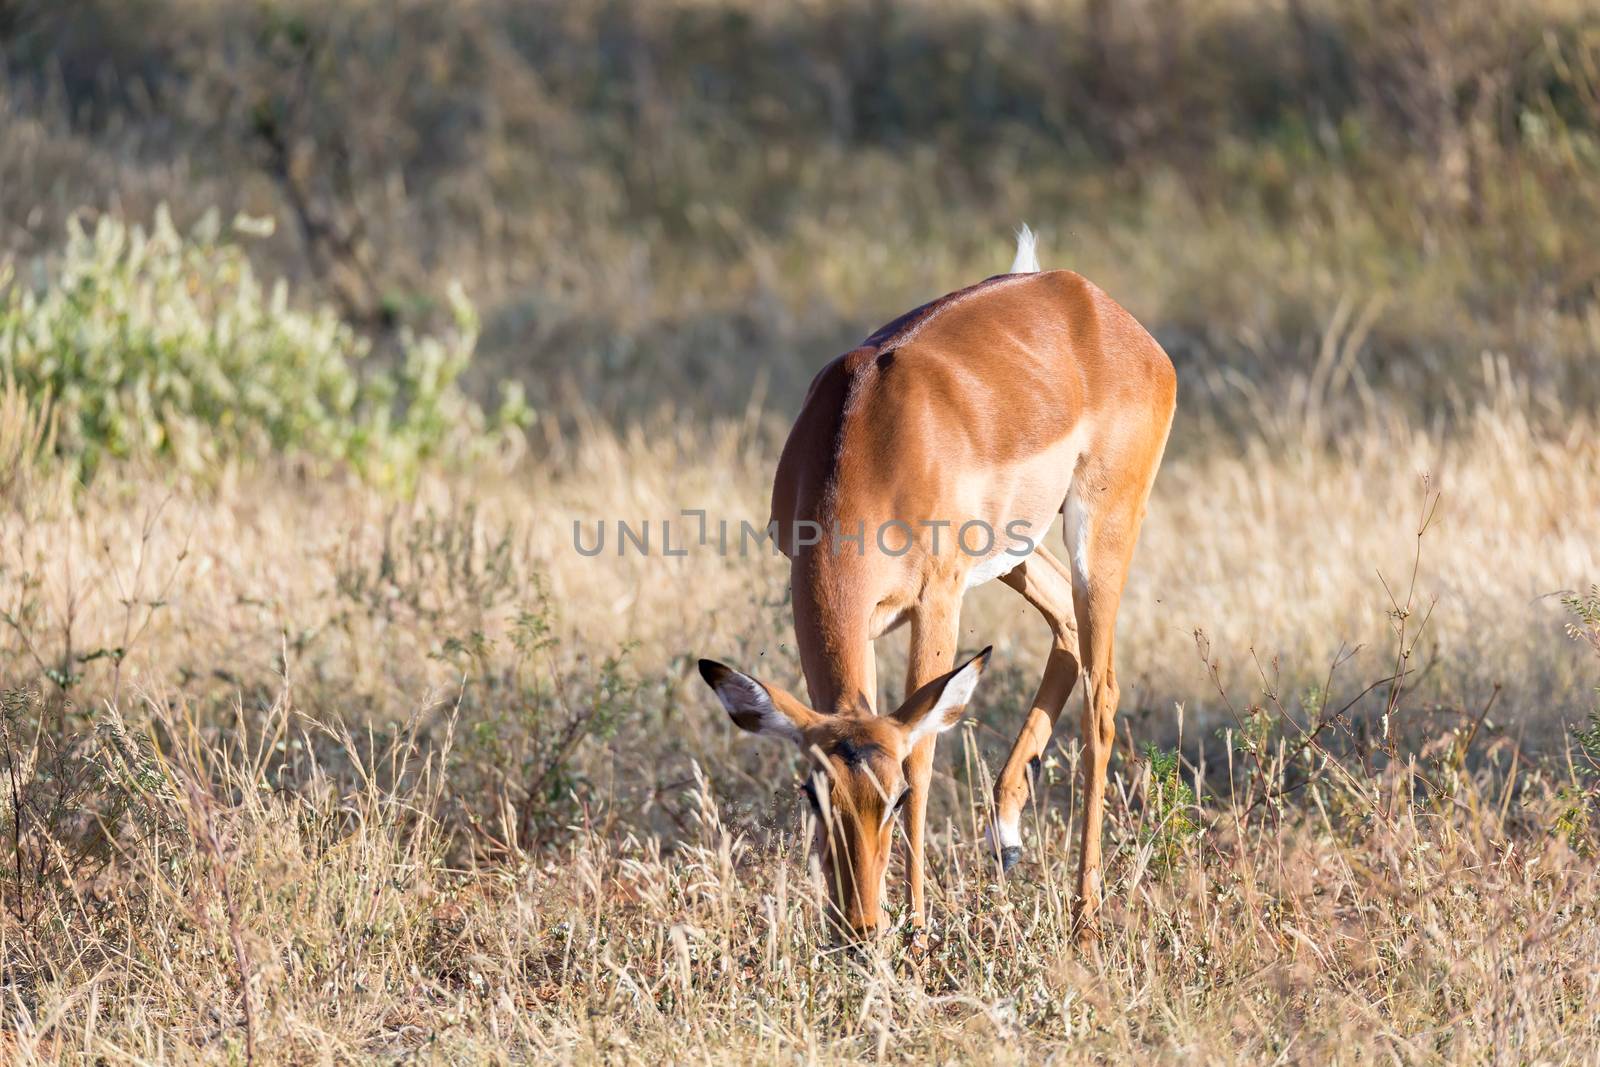 Impala gazelles grazed in the savannah of Kenya by 25ehaag6